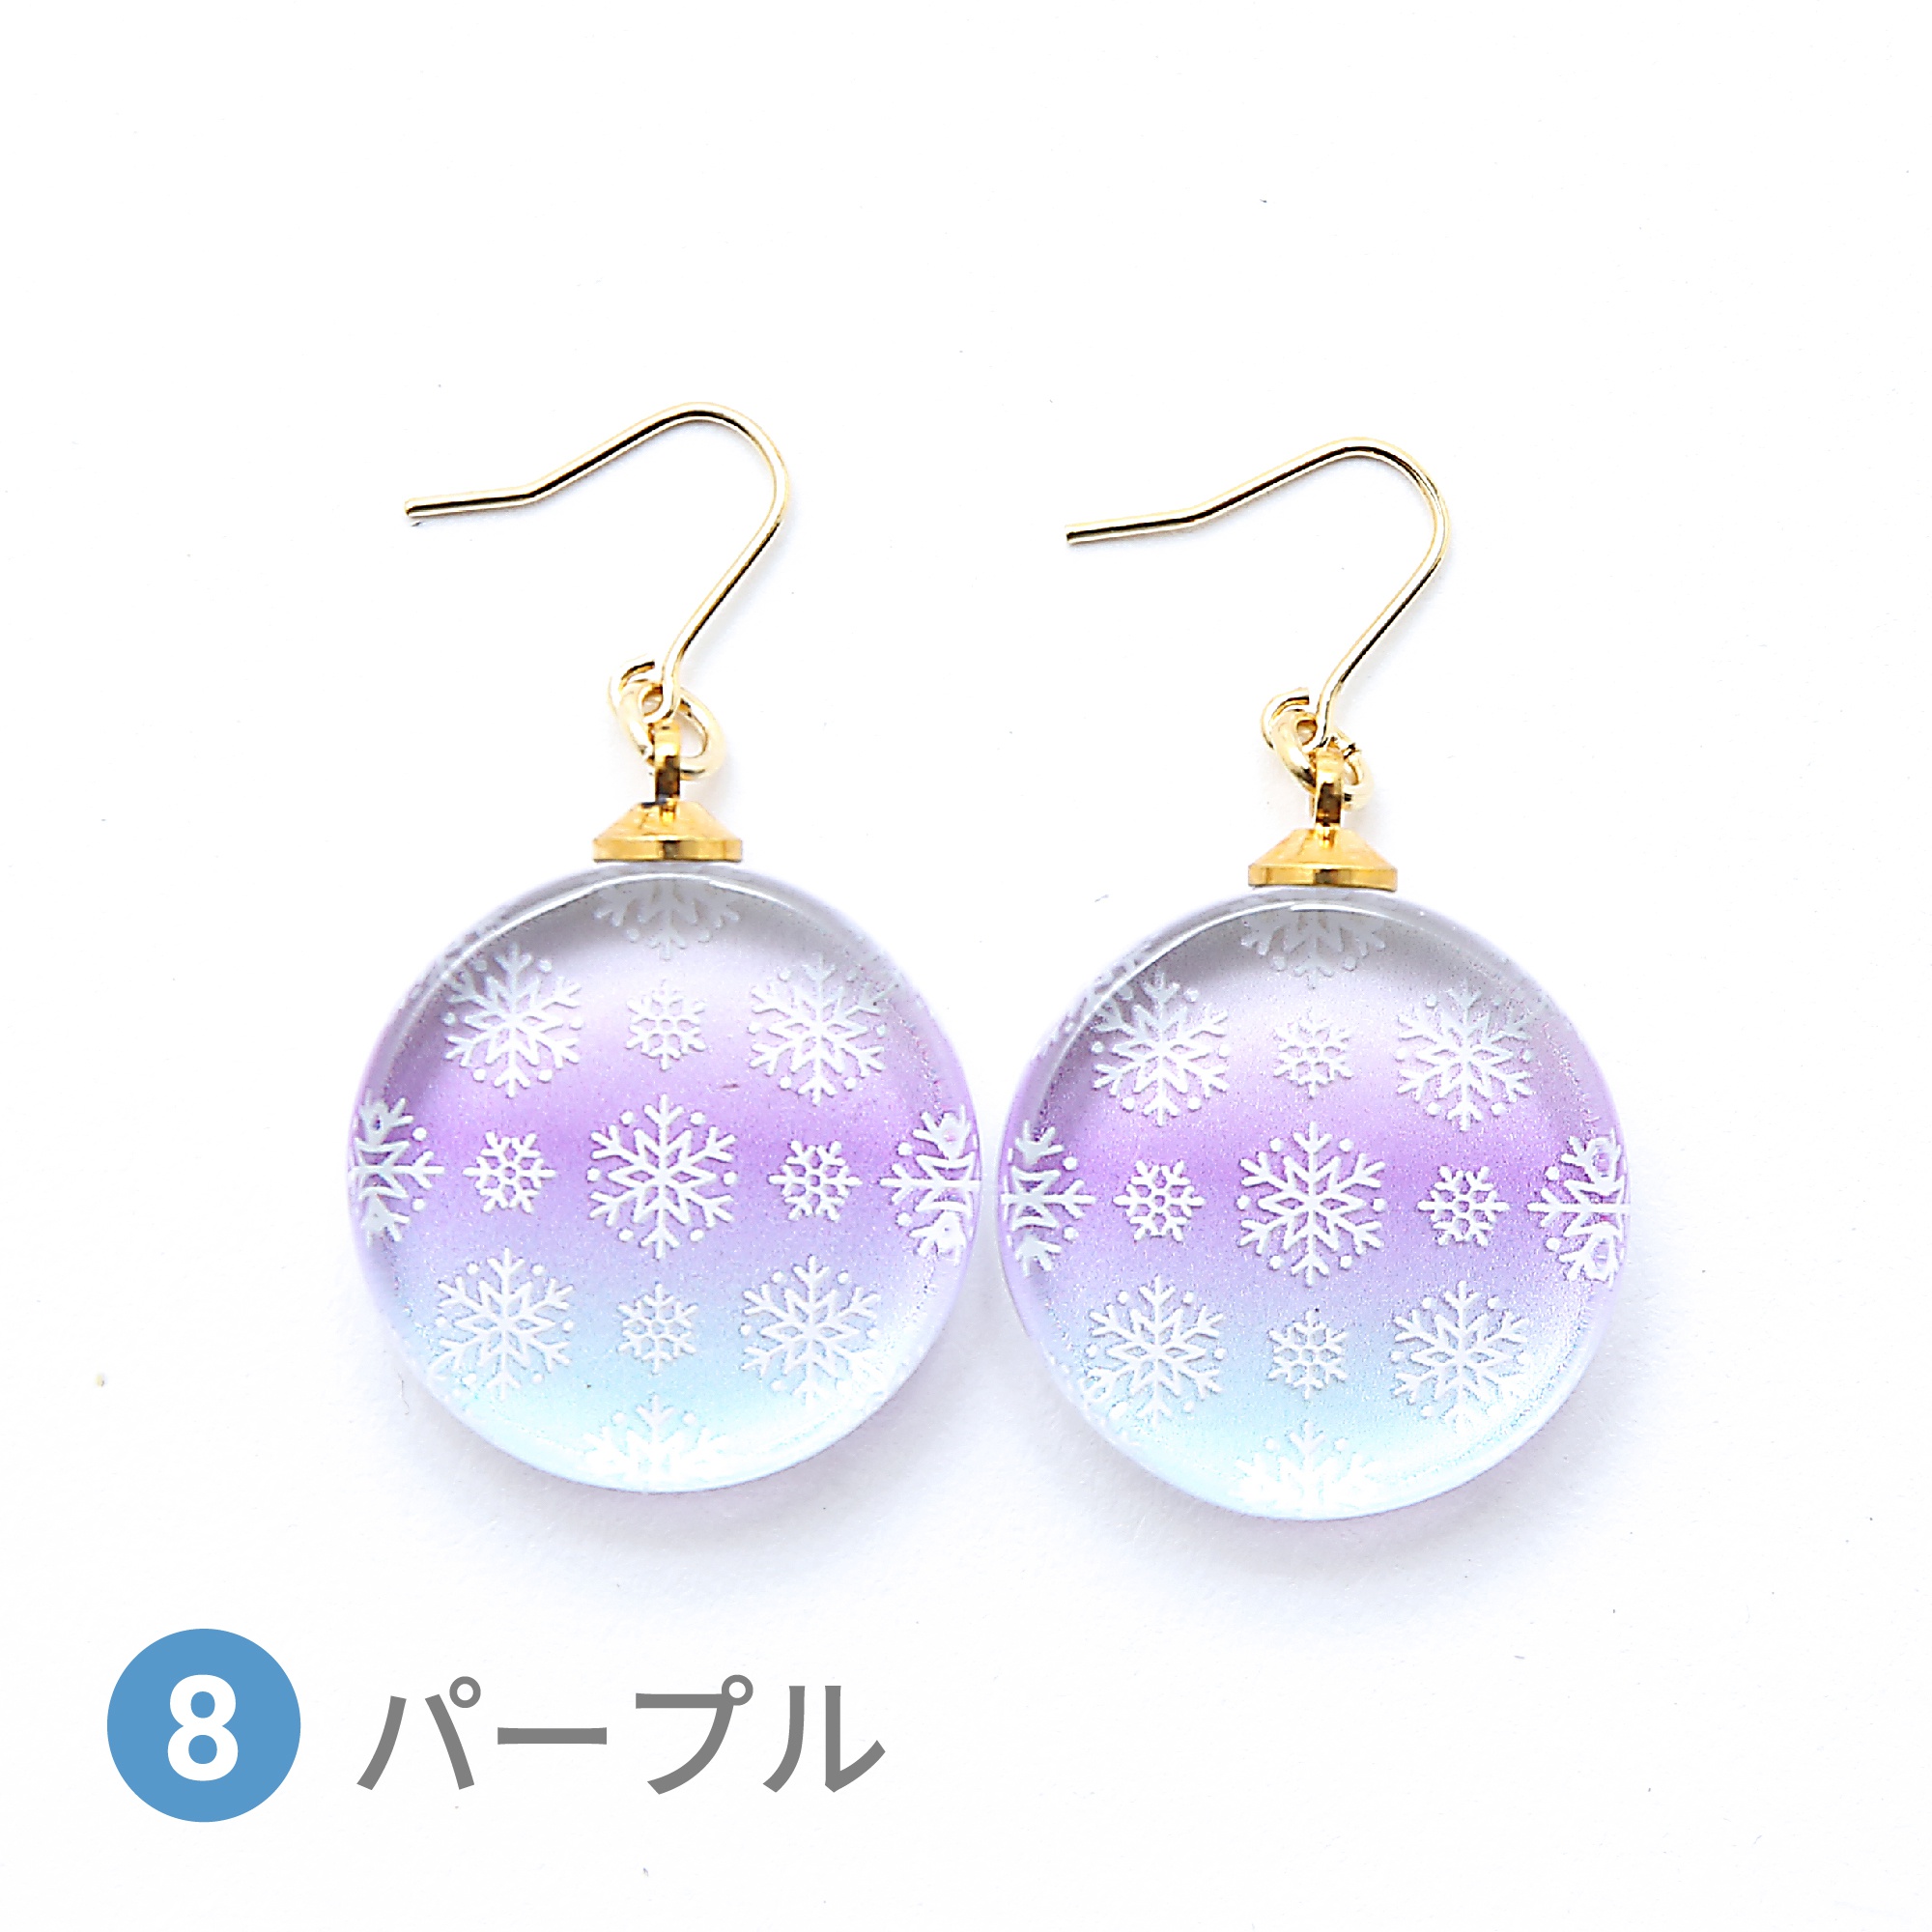 Glass accessories Pierced Earring snow flake purple round shape